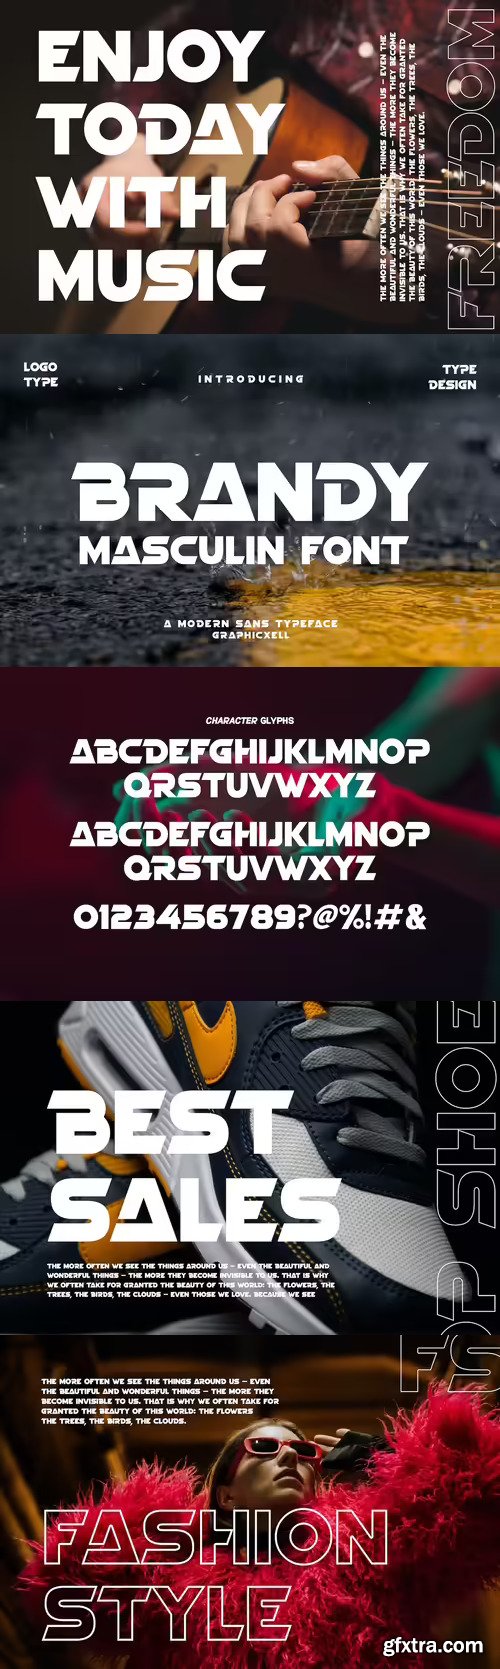 Brandy Masculine Sans Serif Font Typeface